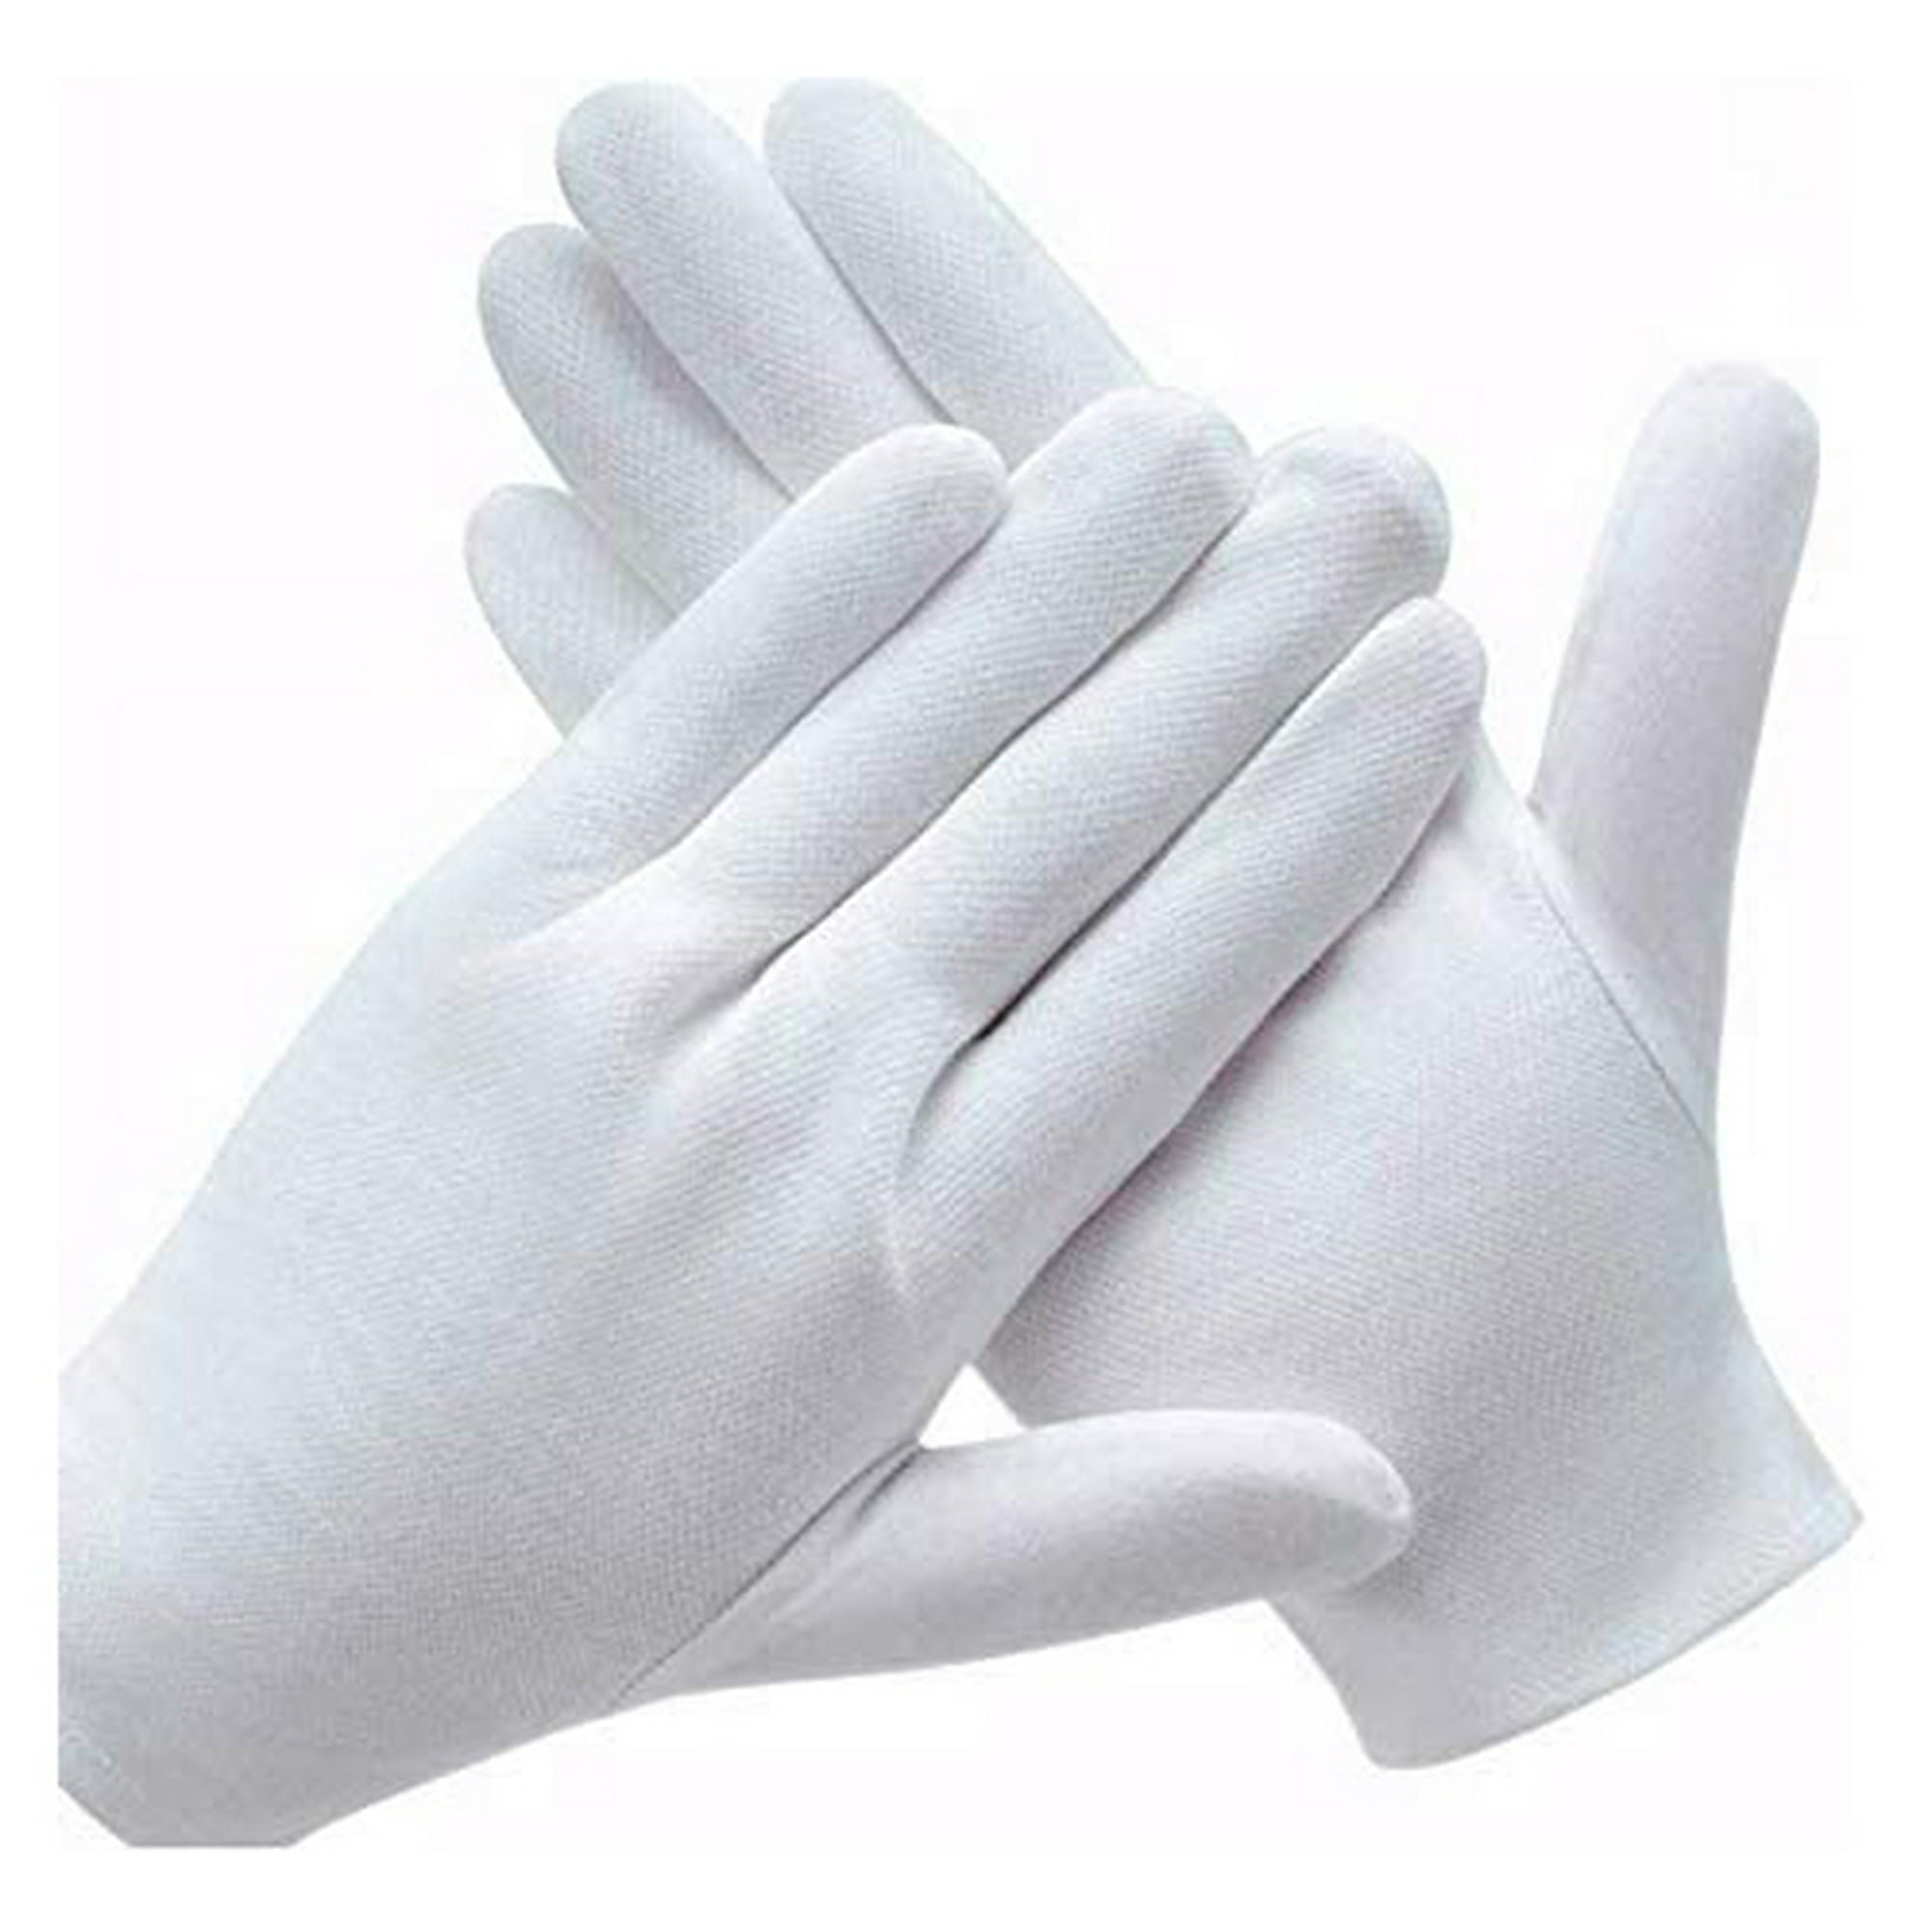 10 pares de guantes de algodón blanco guantes de guantes de algodón desechables para manos secas, eccema, belleza, monedas, e inspección de plata WD.WDQZL Producto electrónico | Walmart en línea